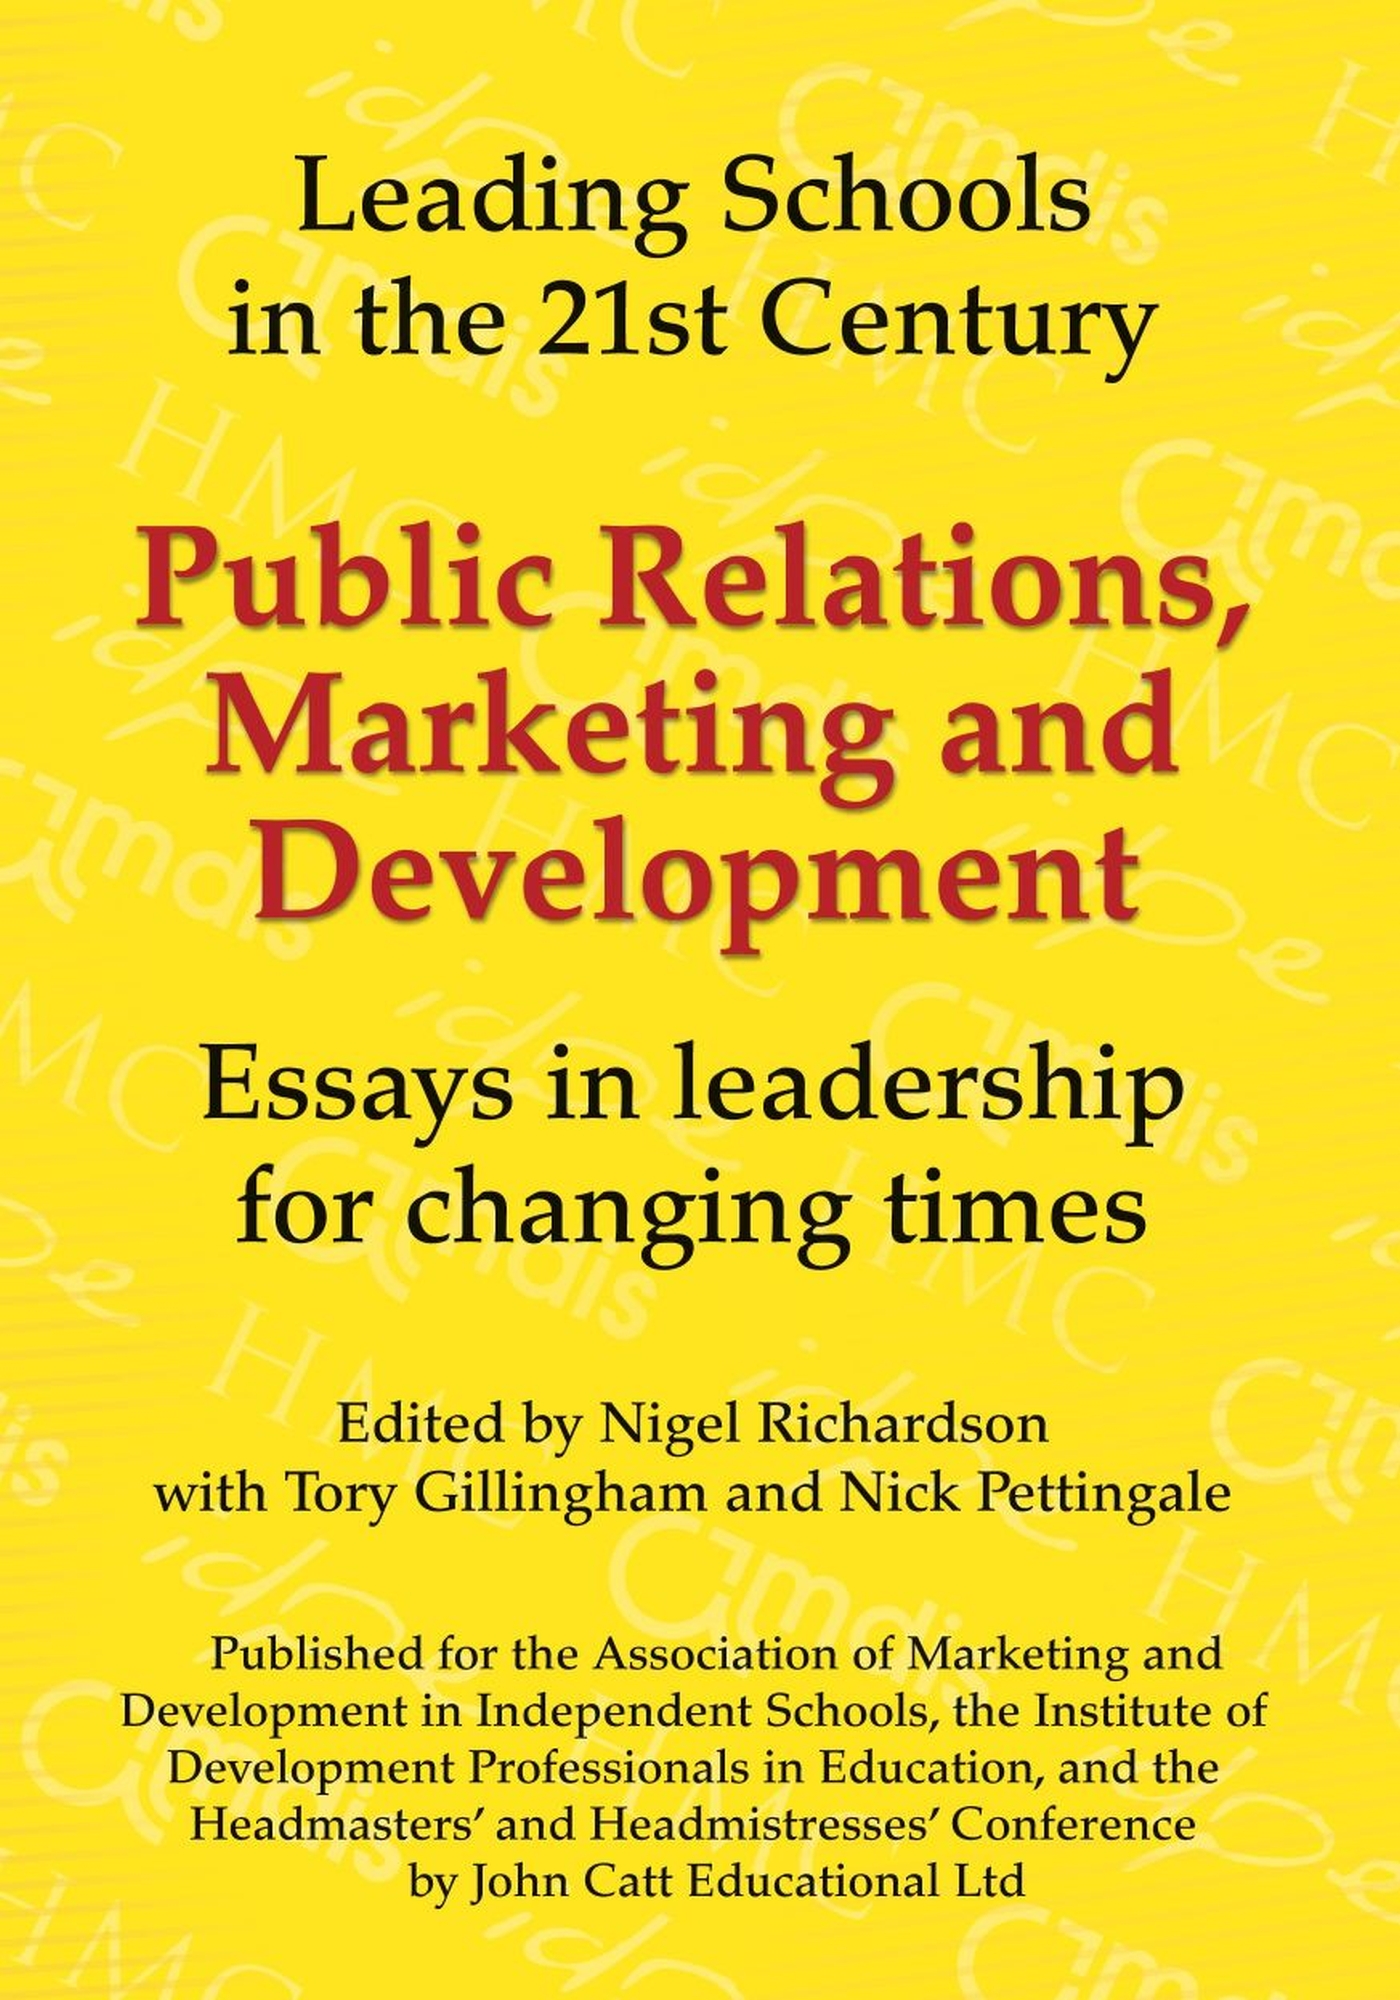 Public Relations, Marketing and Development